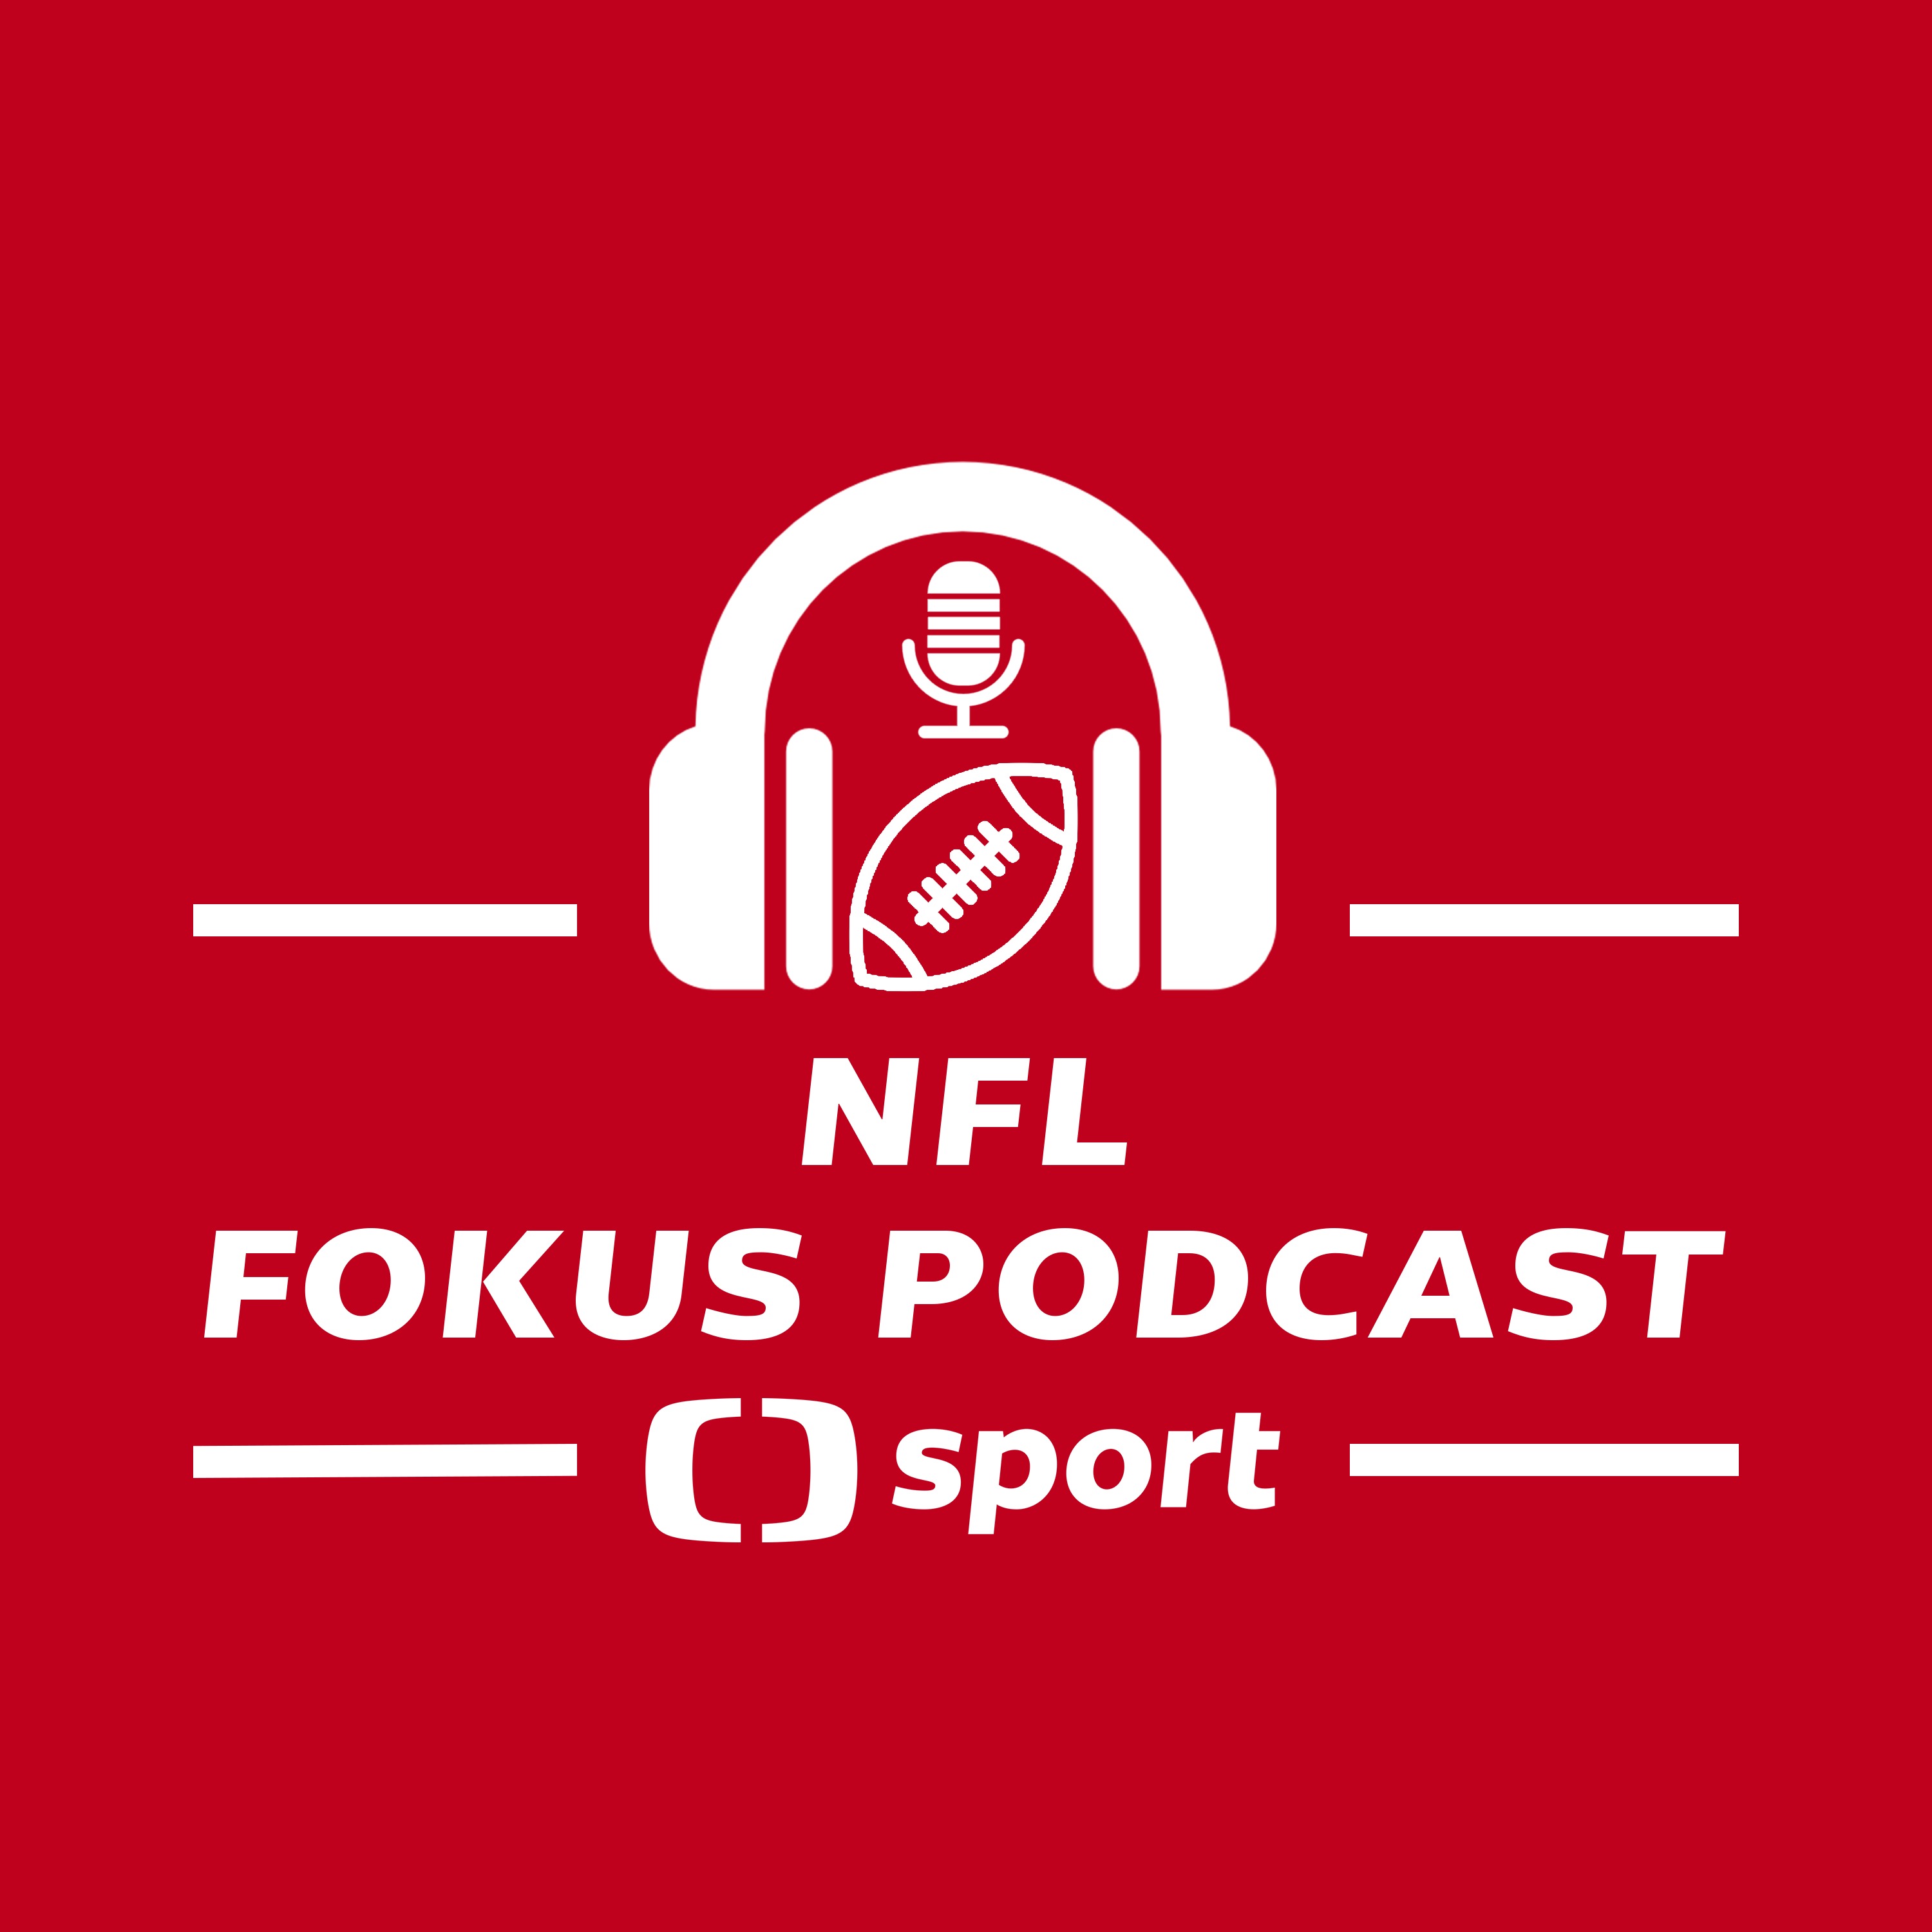 NFL fokus podcast: Radost v New Yorku a Seattlu, rozpaky legend Bradyho s Rodgersem